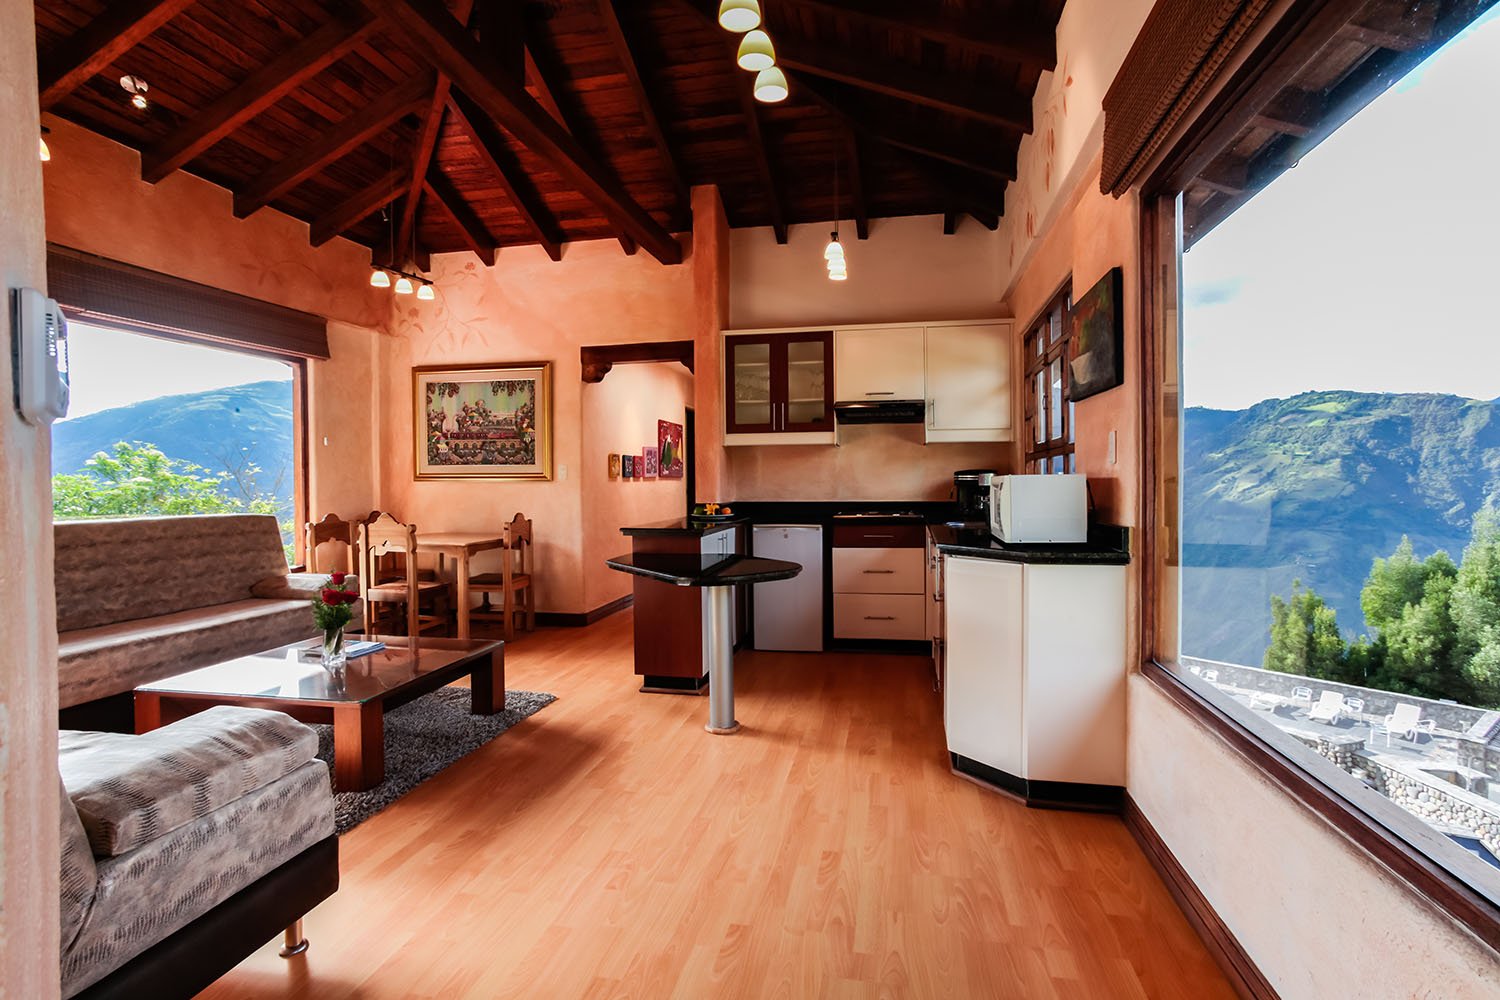 Kitchen and Living Room Suite Huayna Capac 47 - Luna Volcan - Hotel en Banos Ecuador.jpg